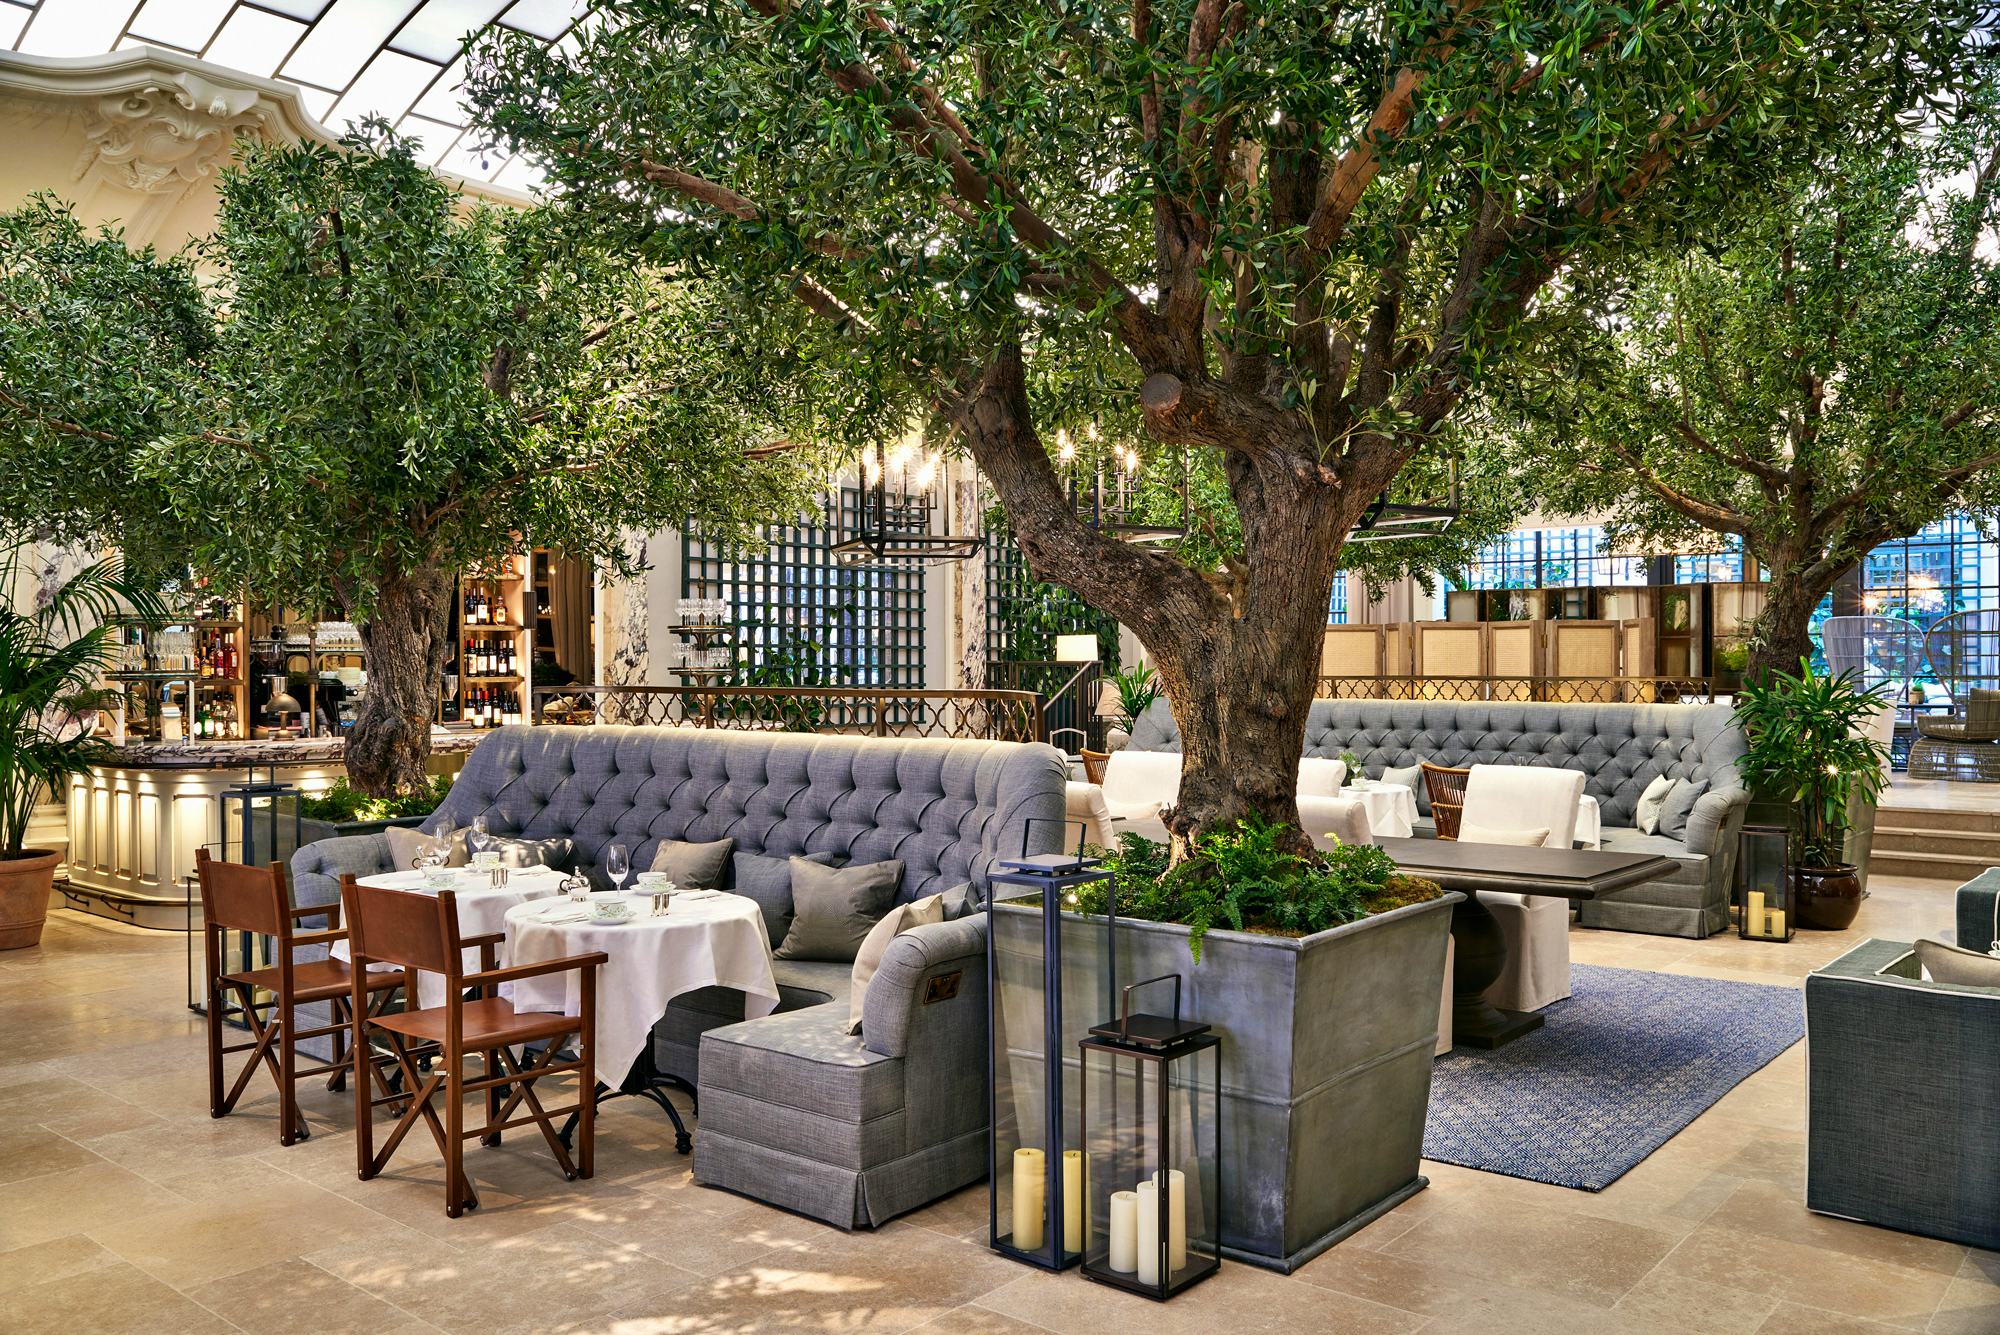 Kimpton Fitzroy London hotels venues luxury designer interiors palm court lounge dining light bright spaces